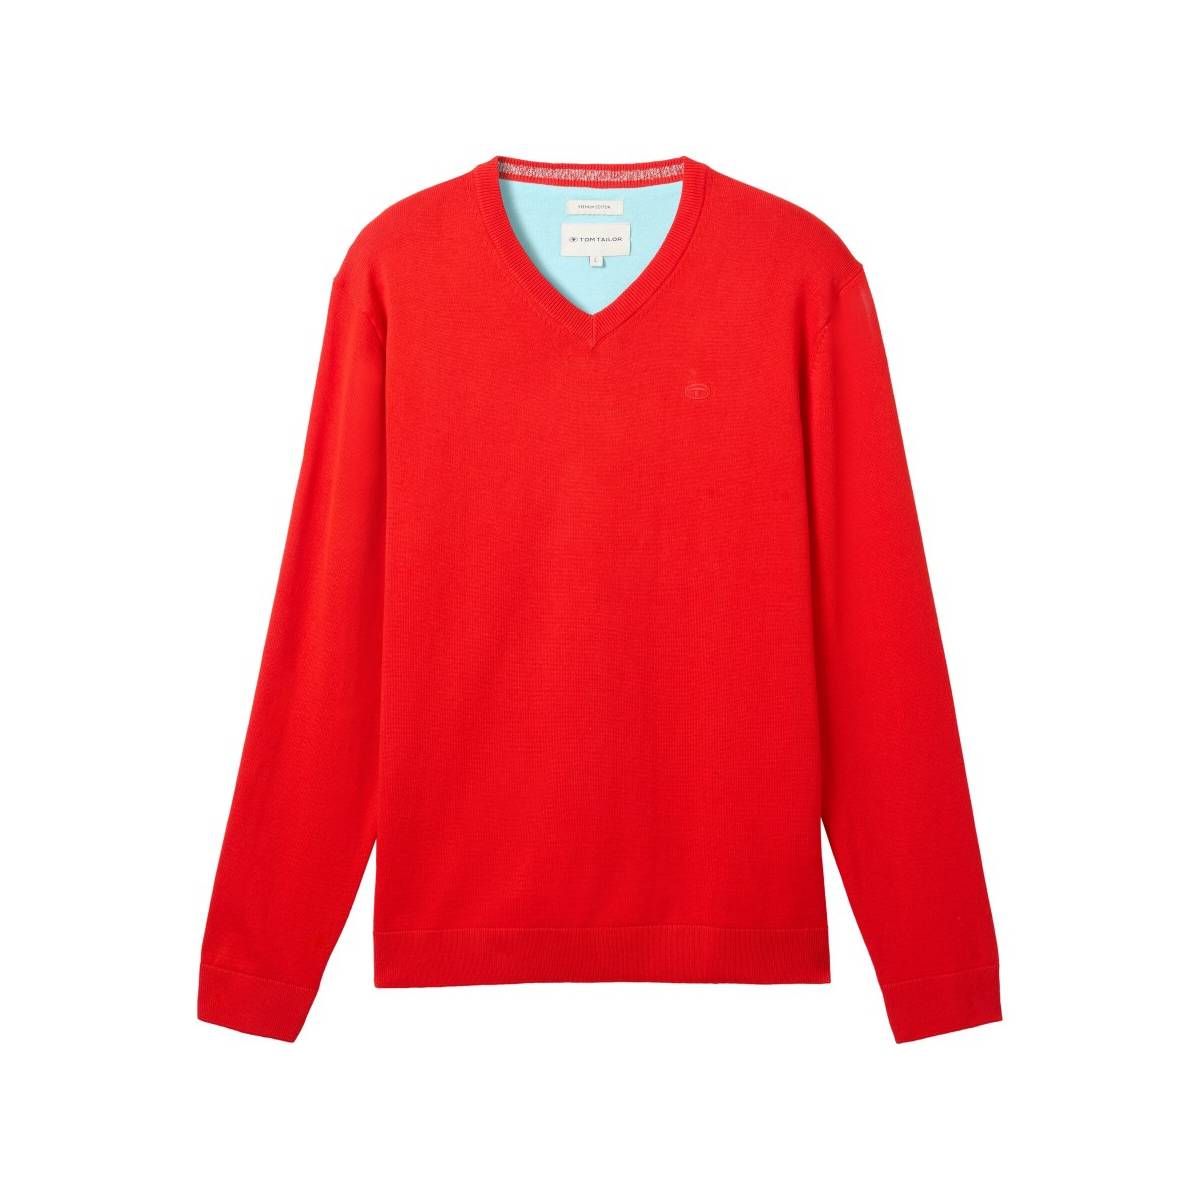 TOM TAILOR  tricot pull's en gilets rood -  model 1039811 - Herenkleding tricot pull's en gilets rood